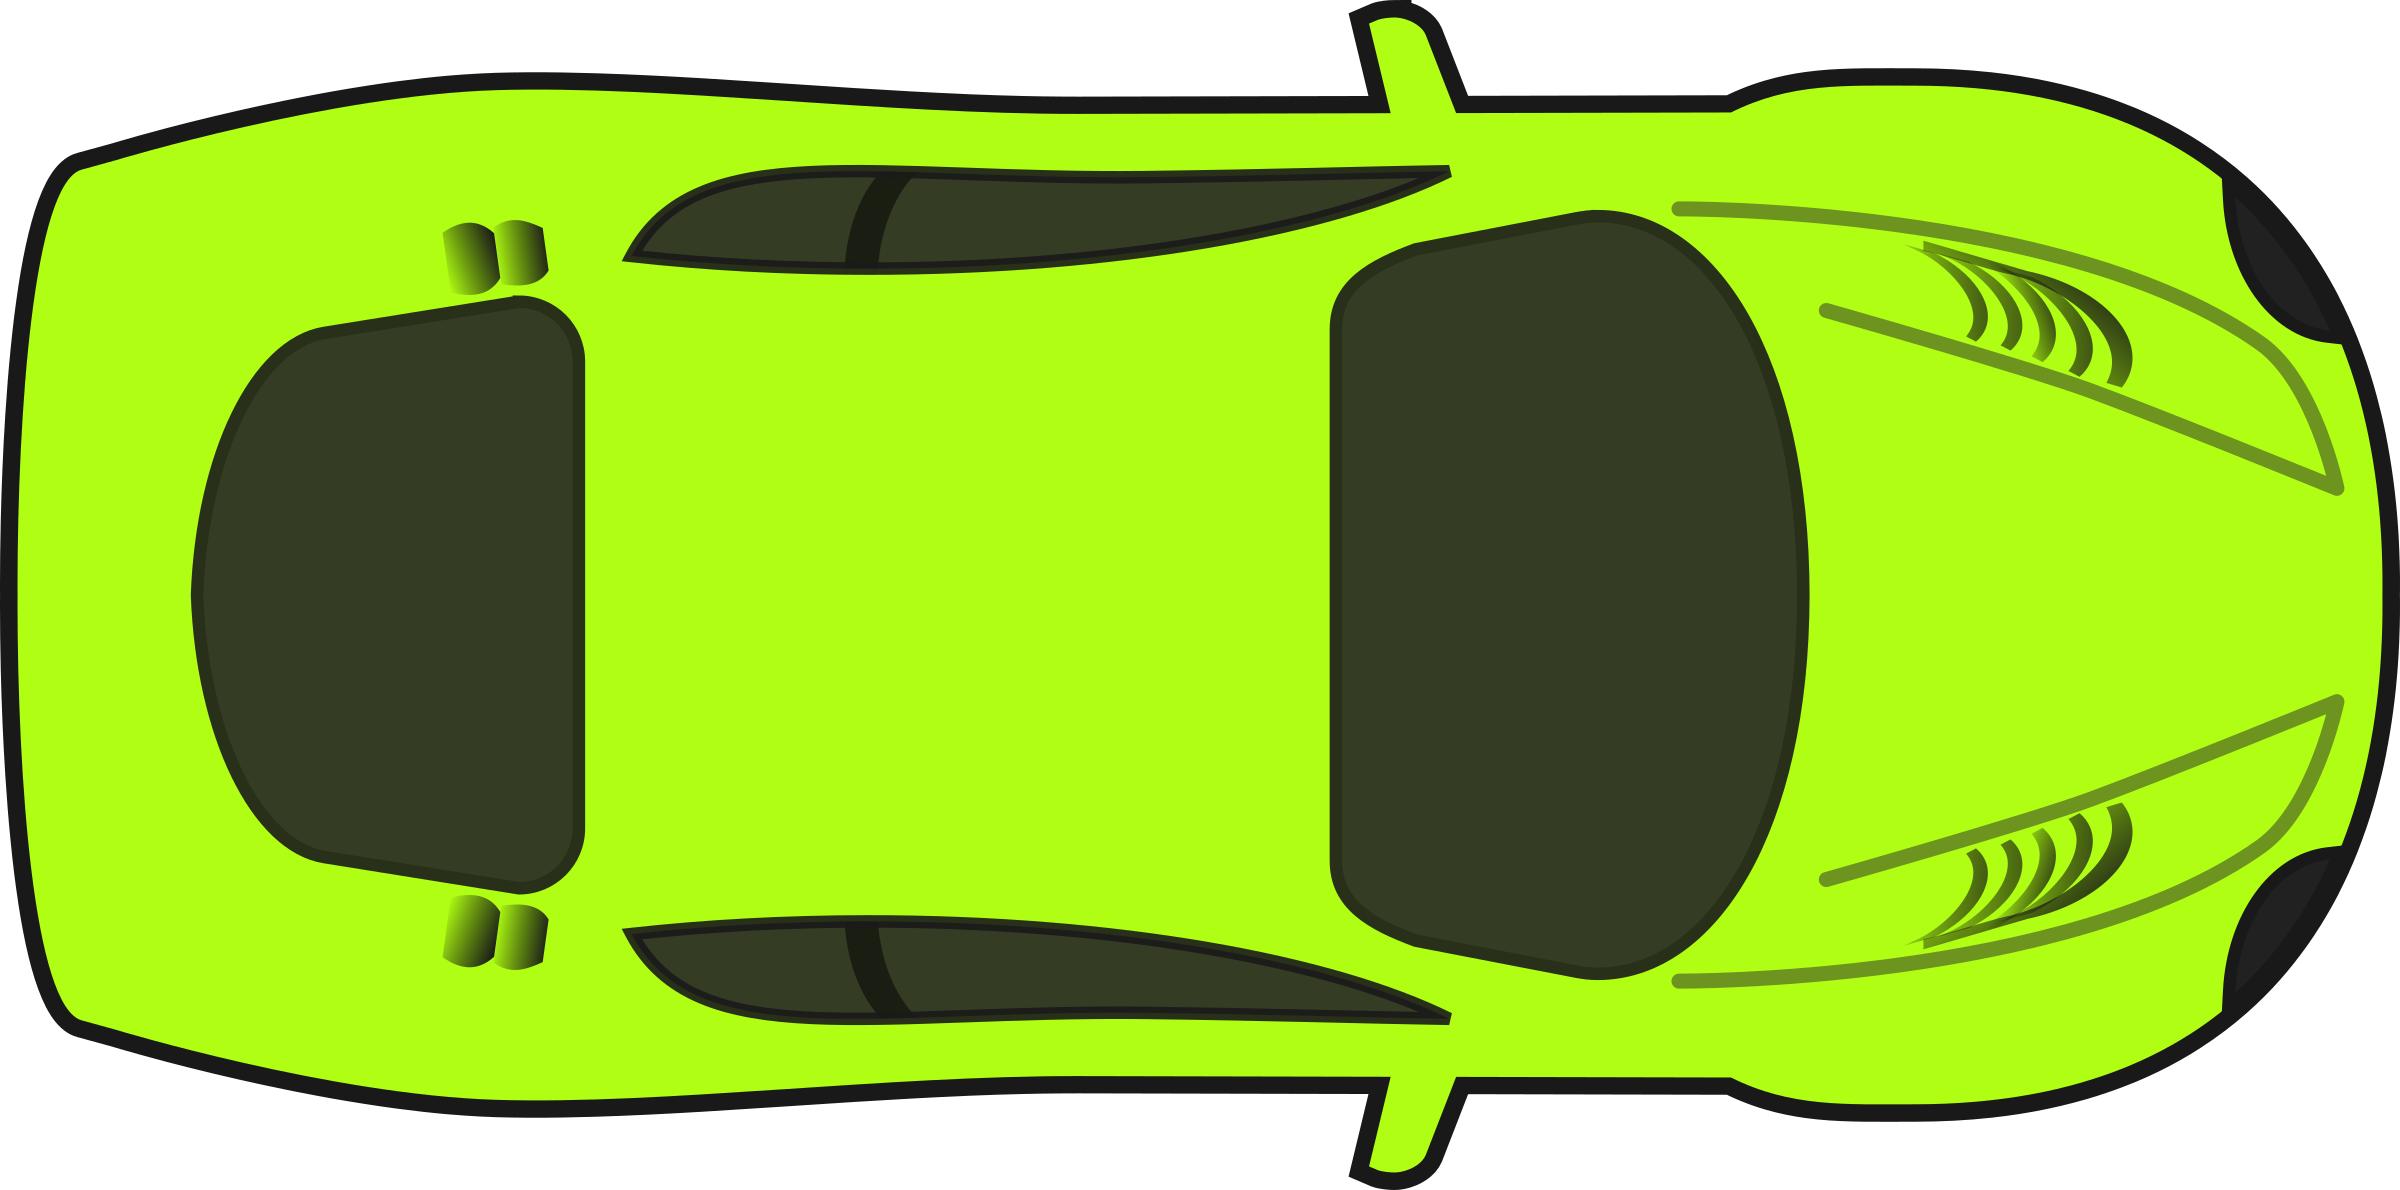 Bright Green Racing Car (Top View) png